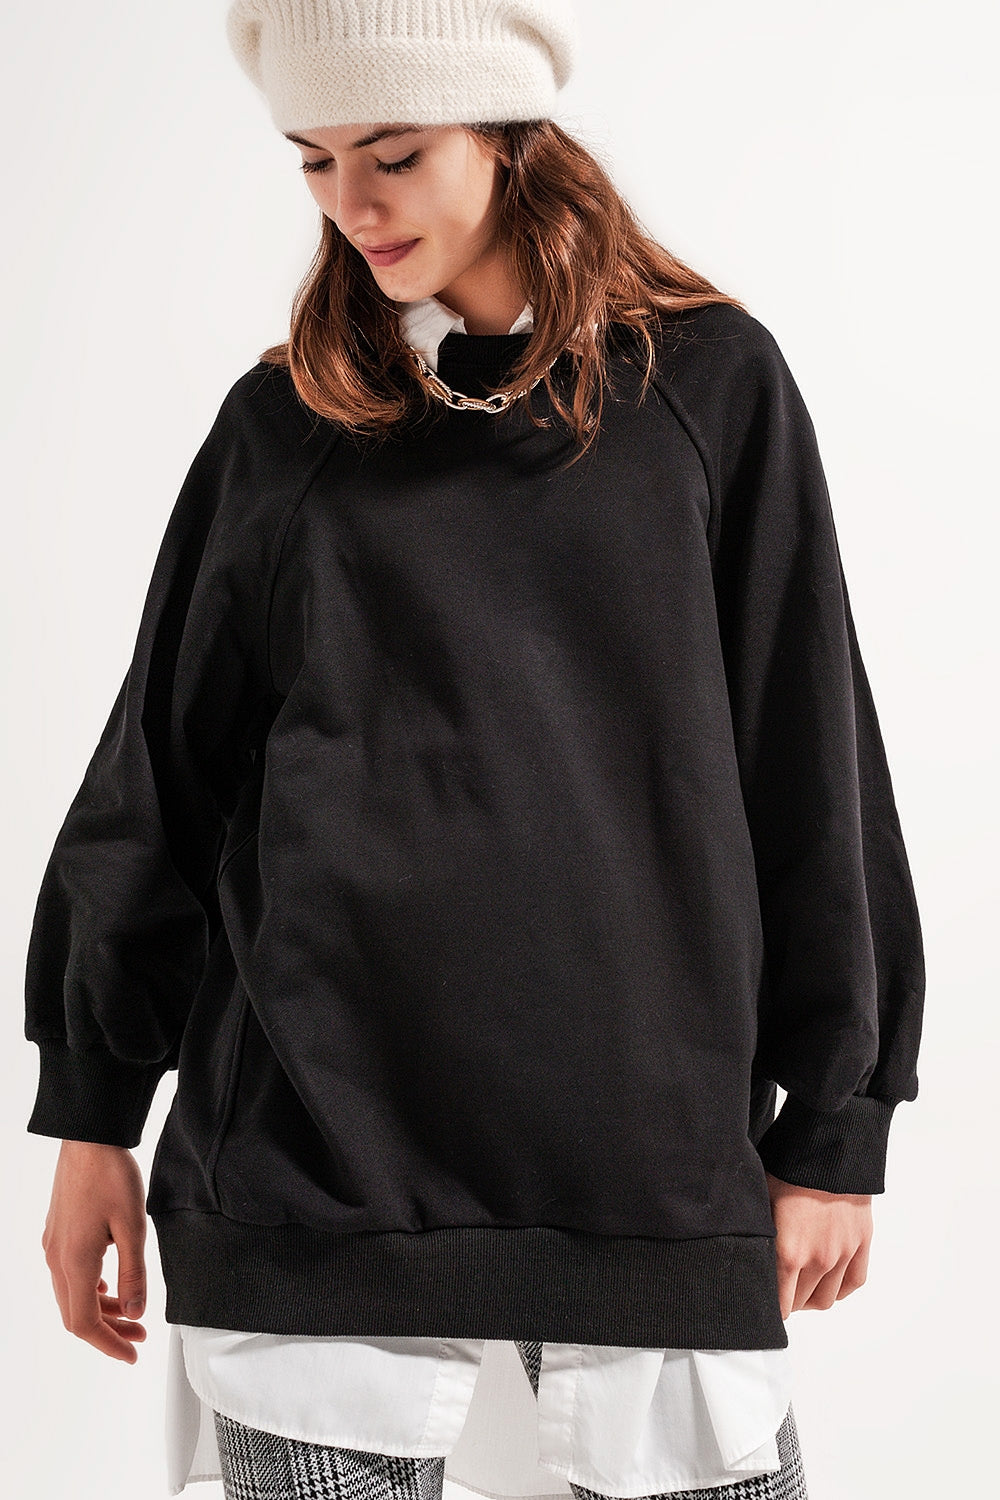 Super oversized sweatshirt with seam detail in black